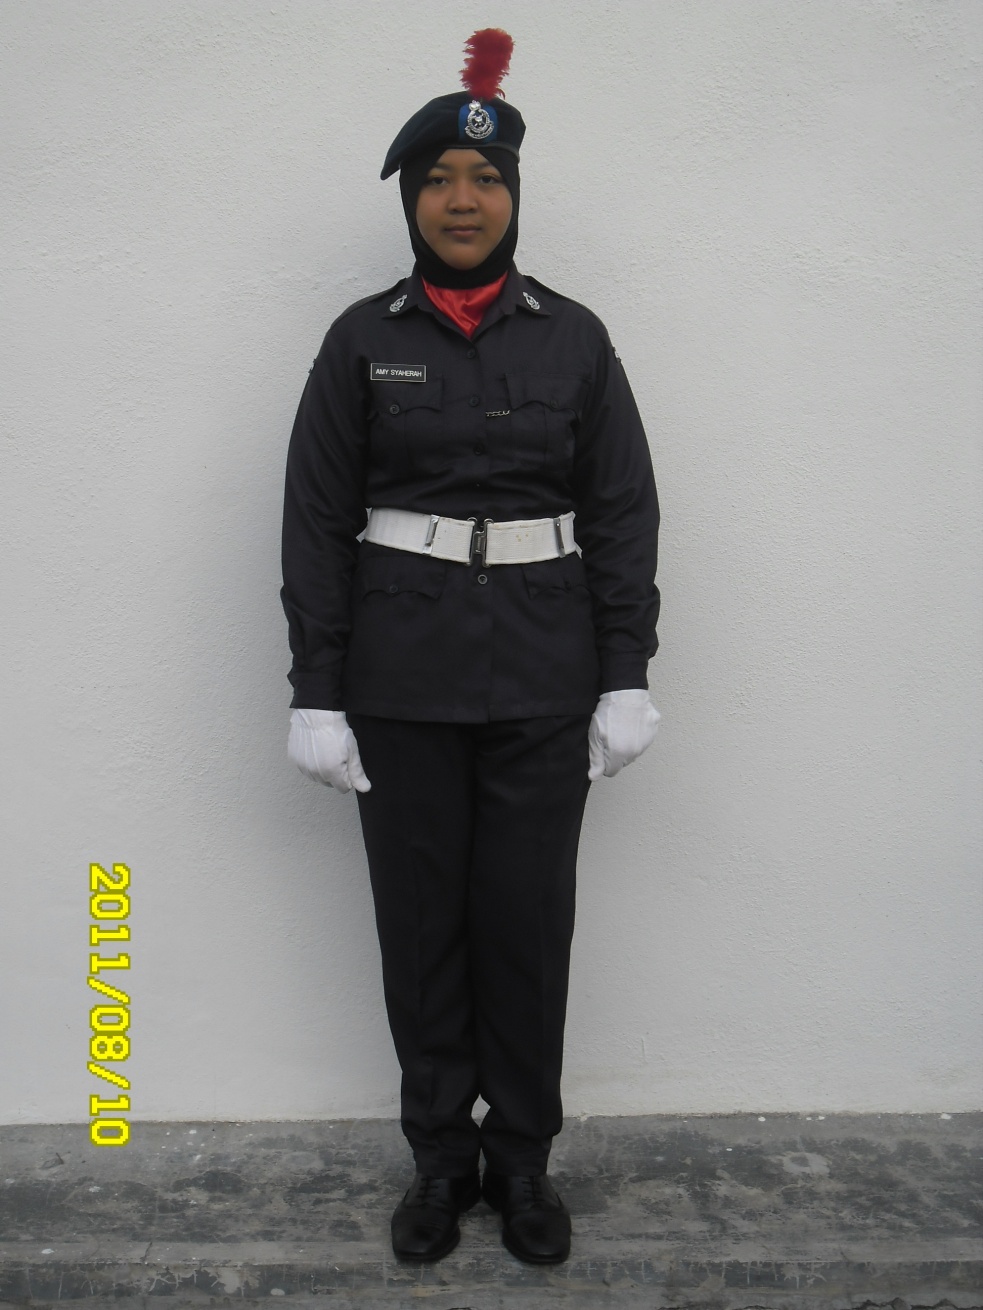 Kadet Polis SMKDI: Uniform